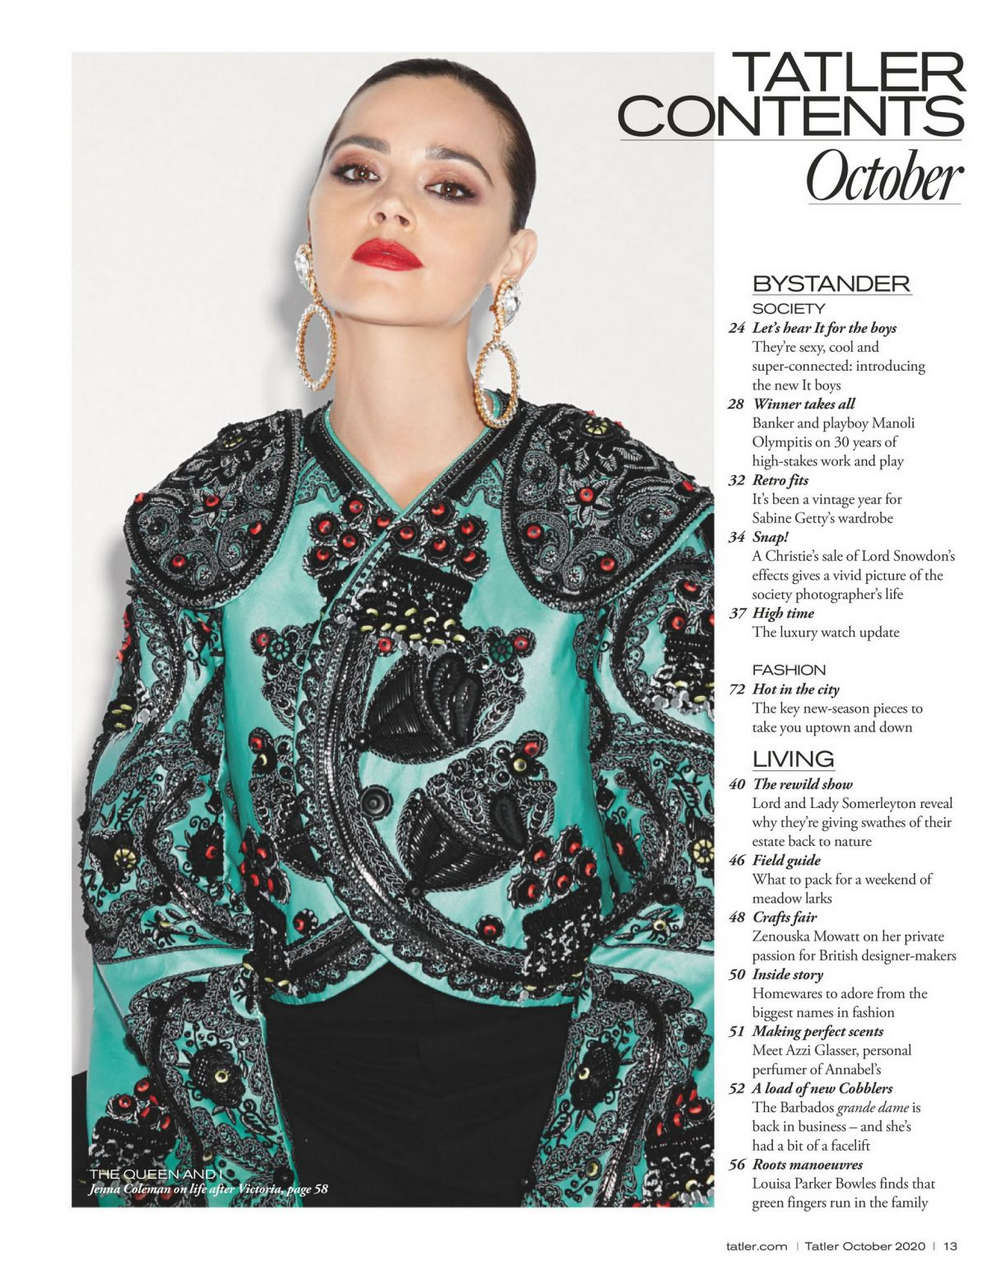 Jenna Louise Coleman For Tatler Magazine October